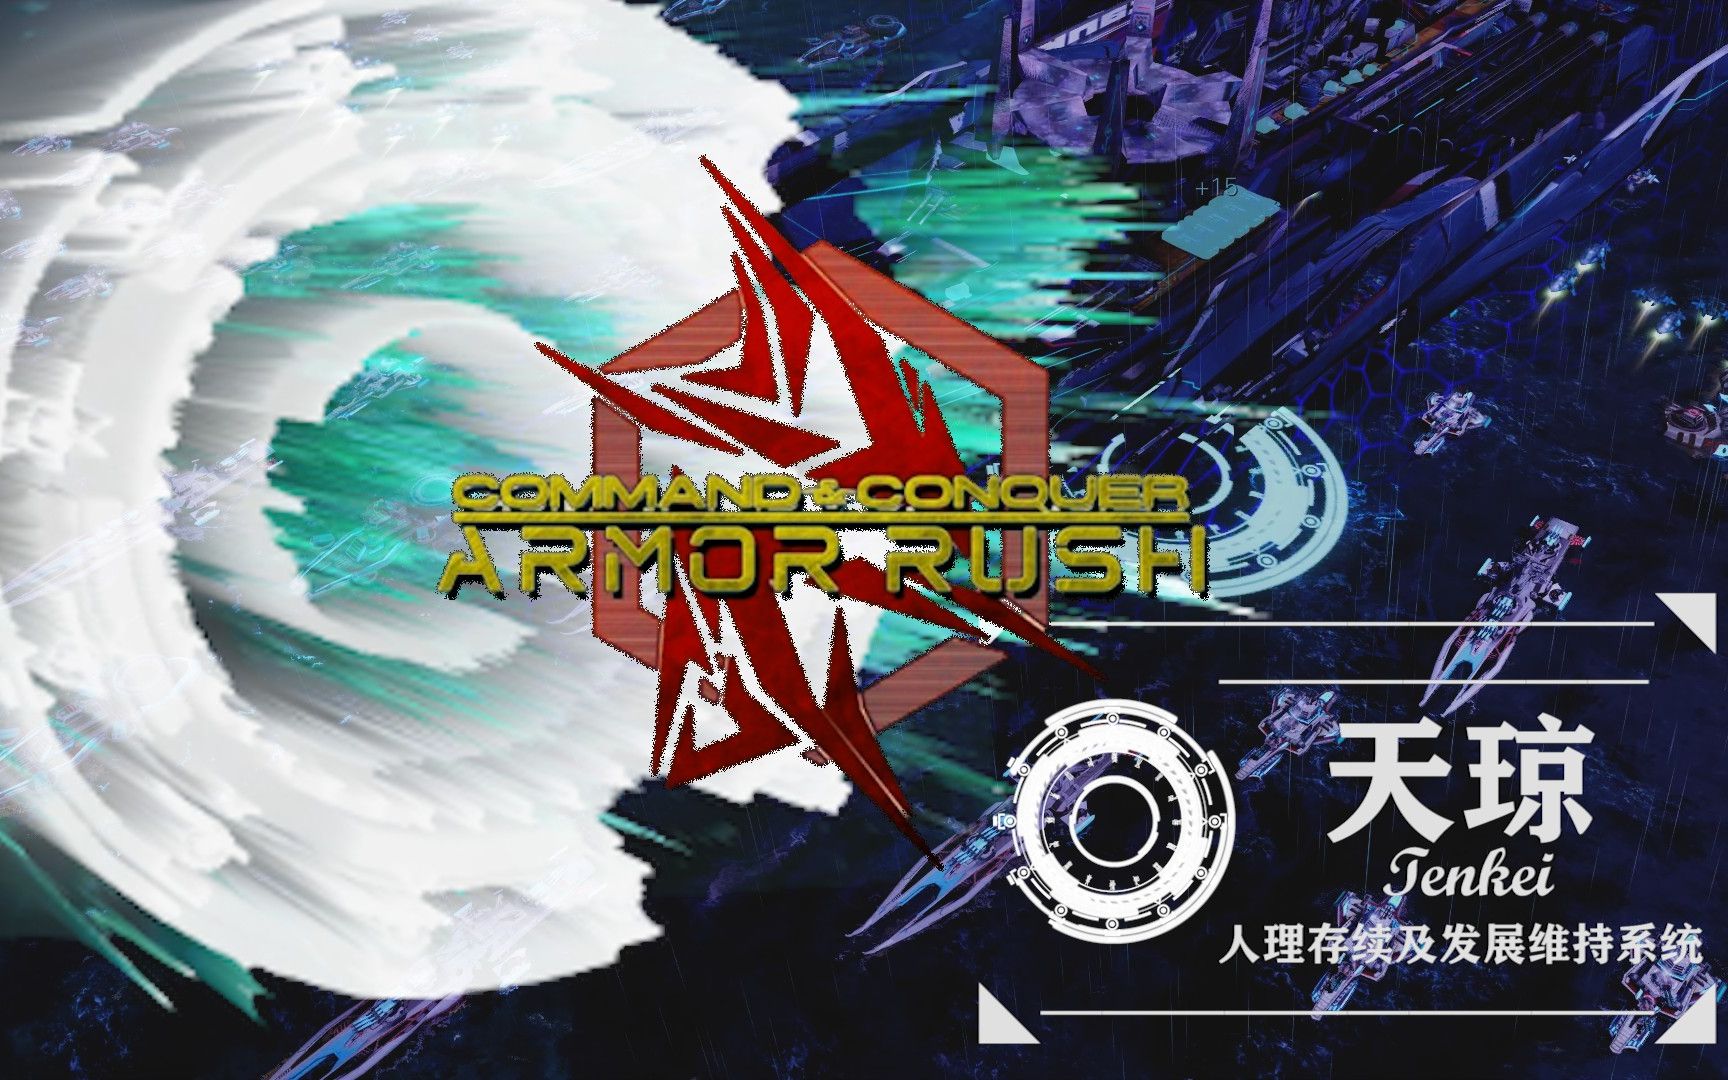 【Armor Rush】红色警戒3装甲冲击 天琼阵营宣传片